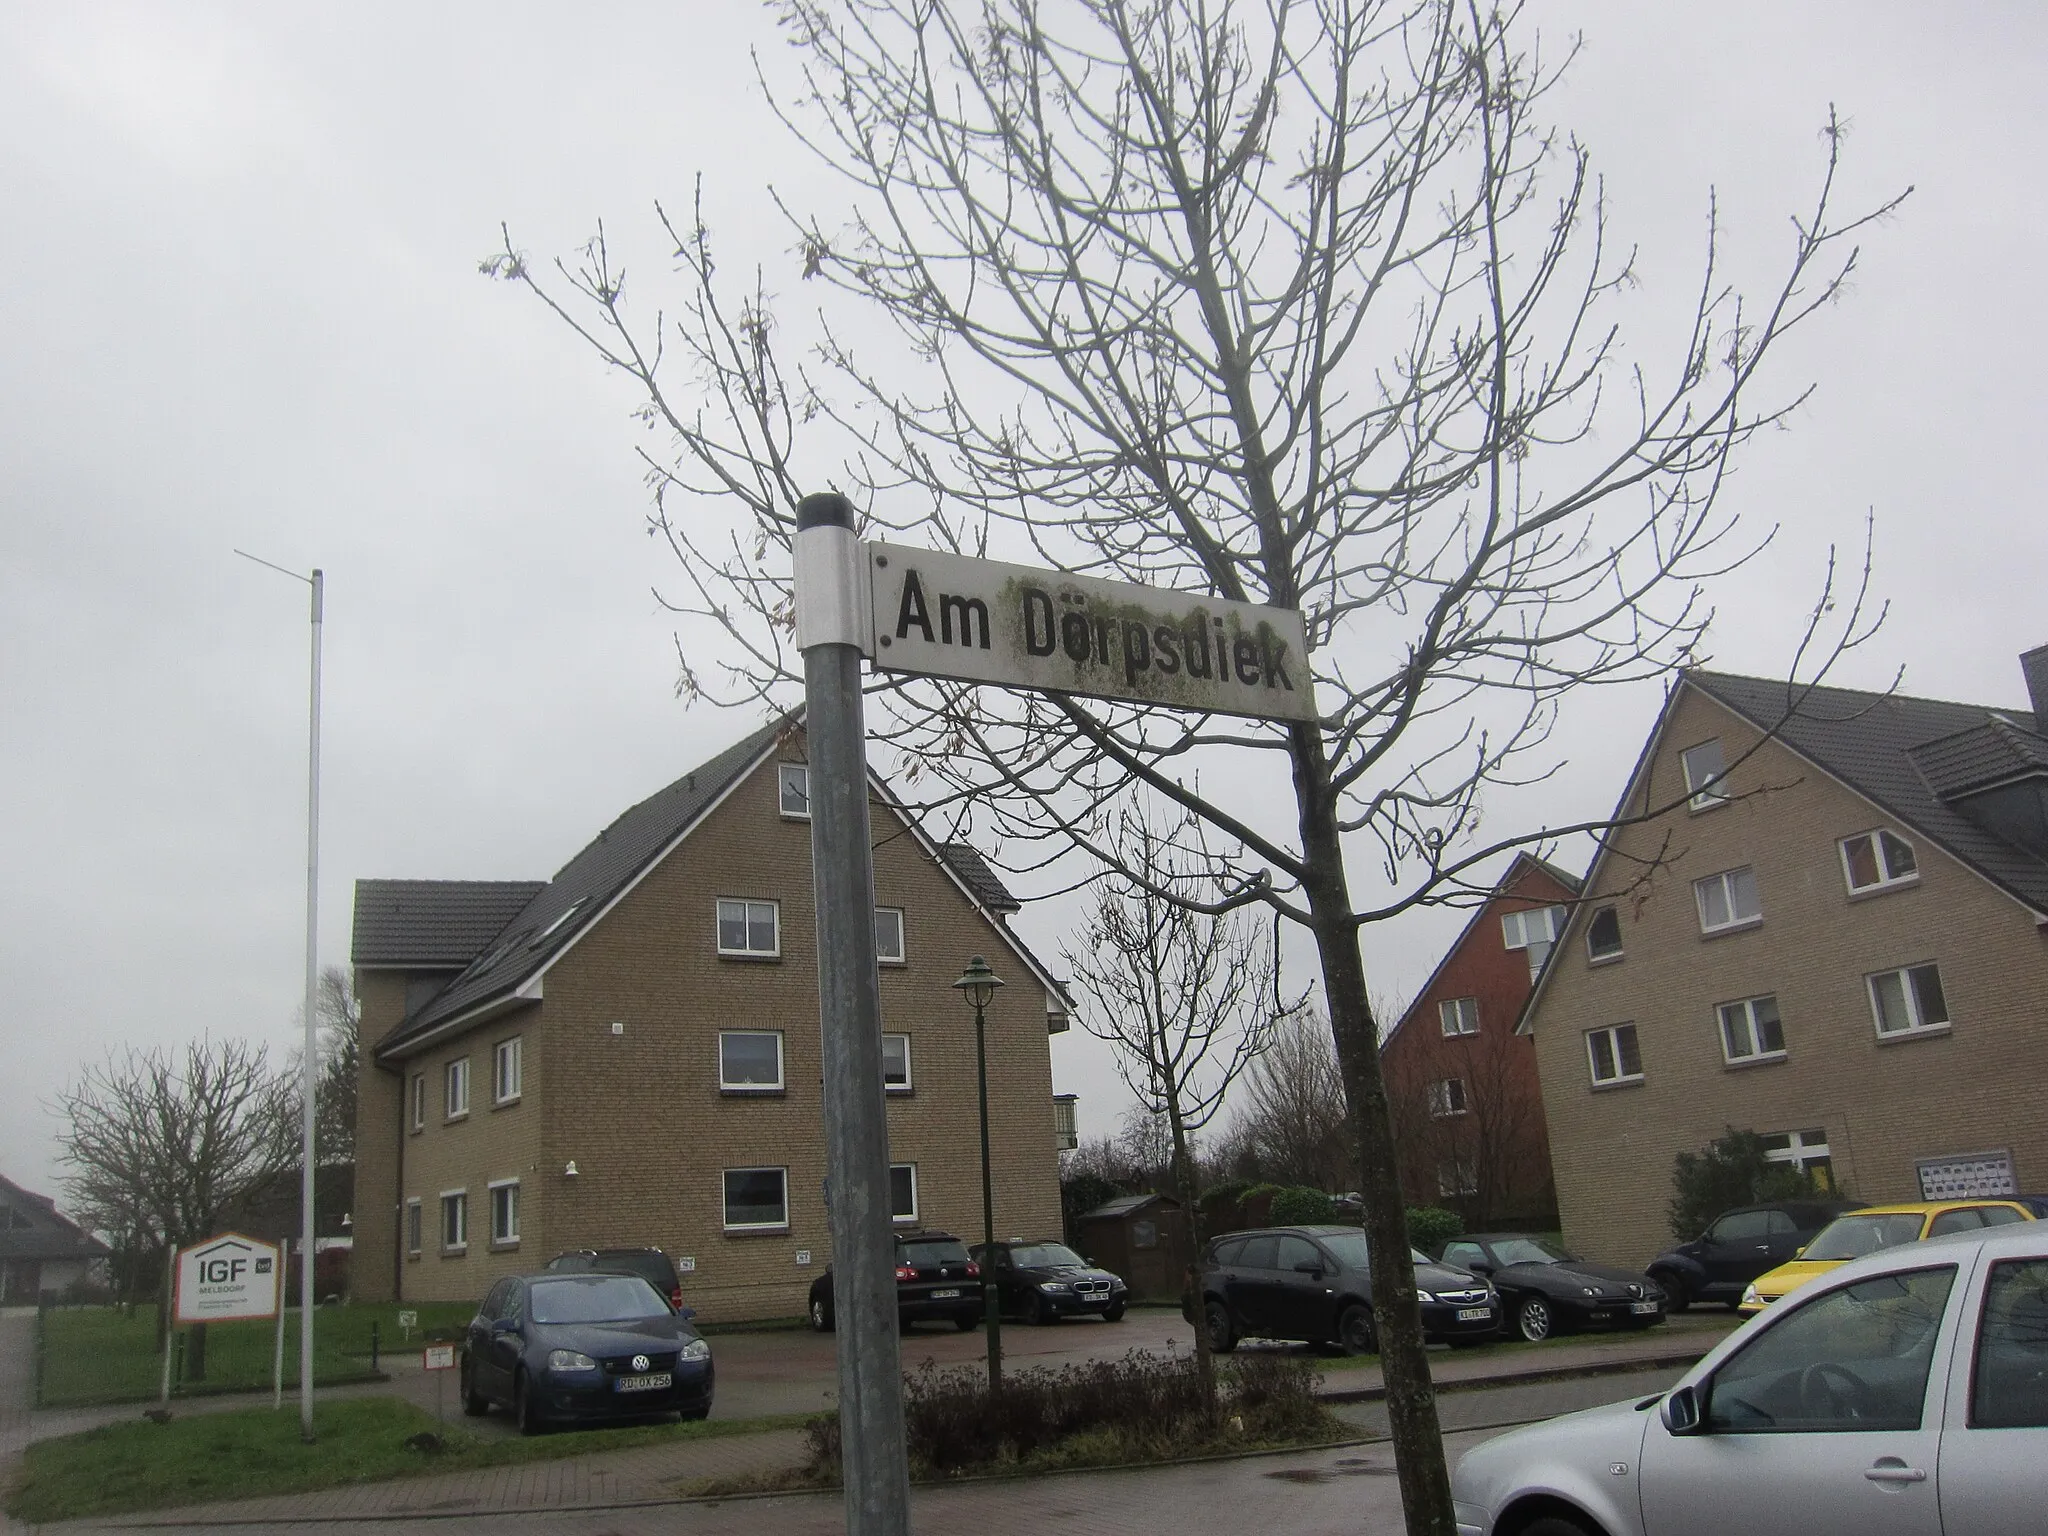 Photo showing: Street sign "Am Dörpsdiek" in Melsdorf